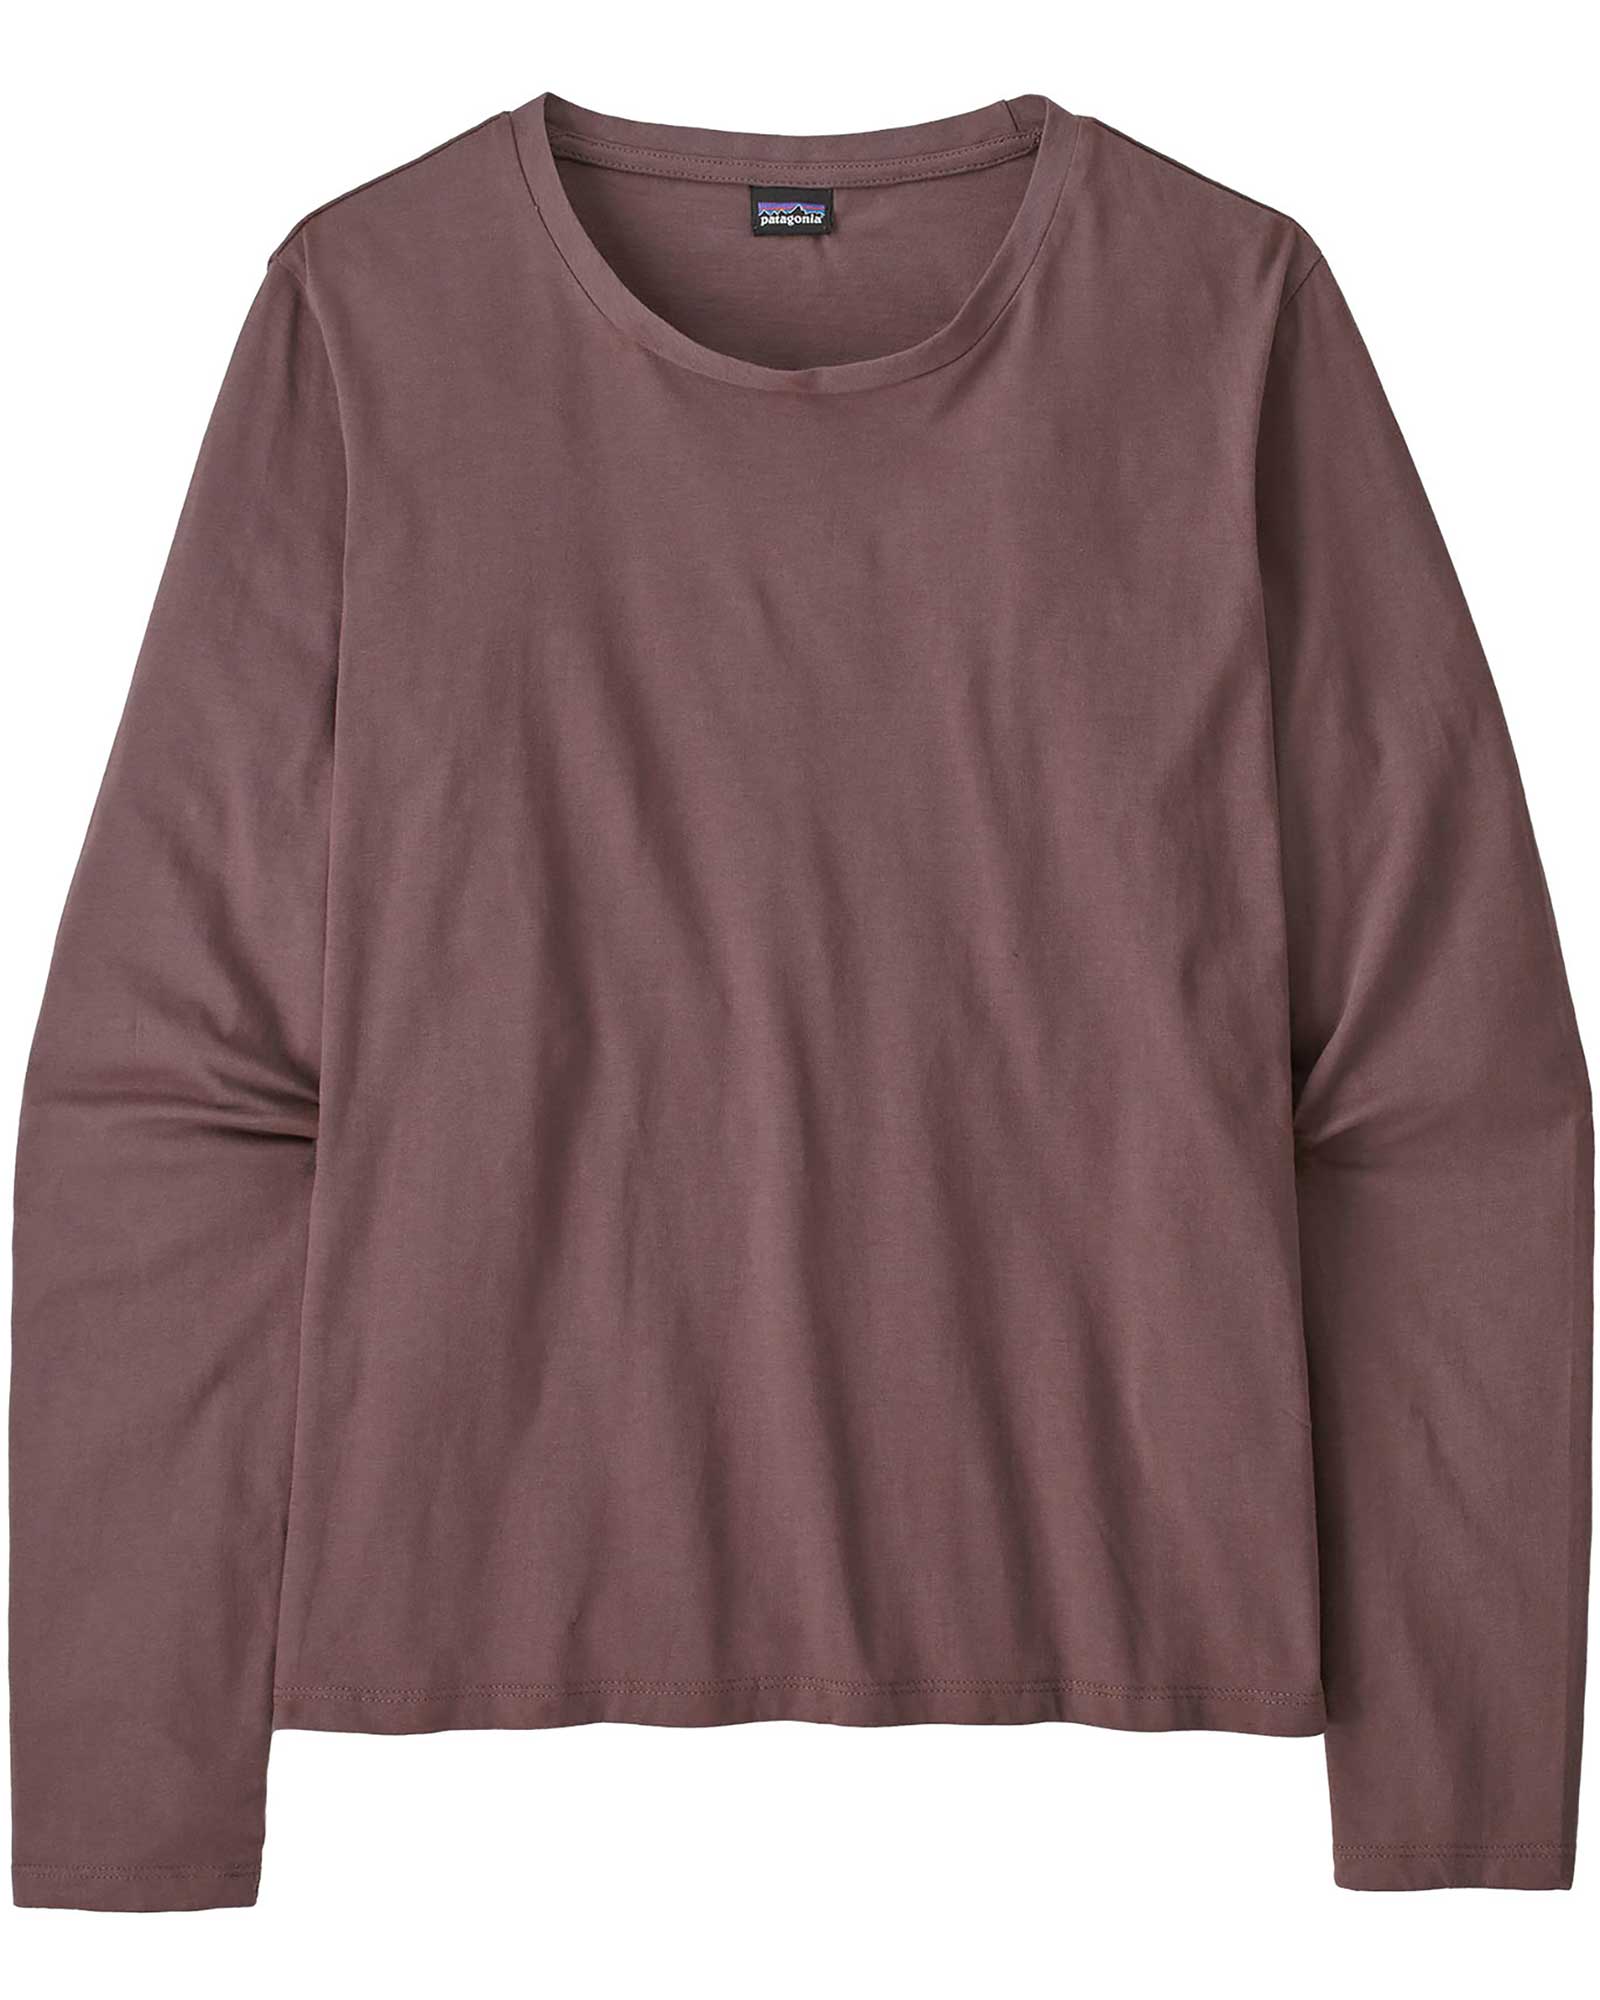 Patagonia Regen Organic Cotton Women’s Long Sleeve T Shirt - Dusky Brown XS